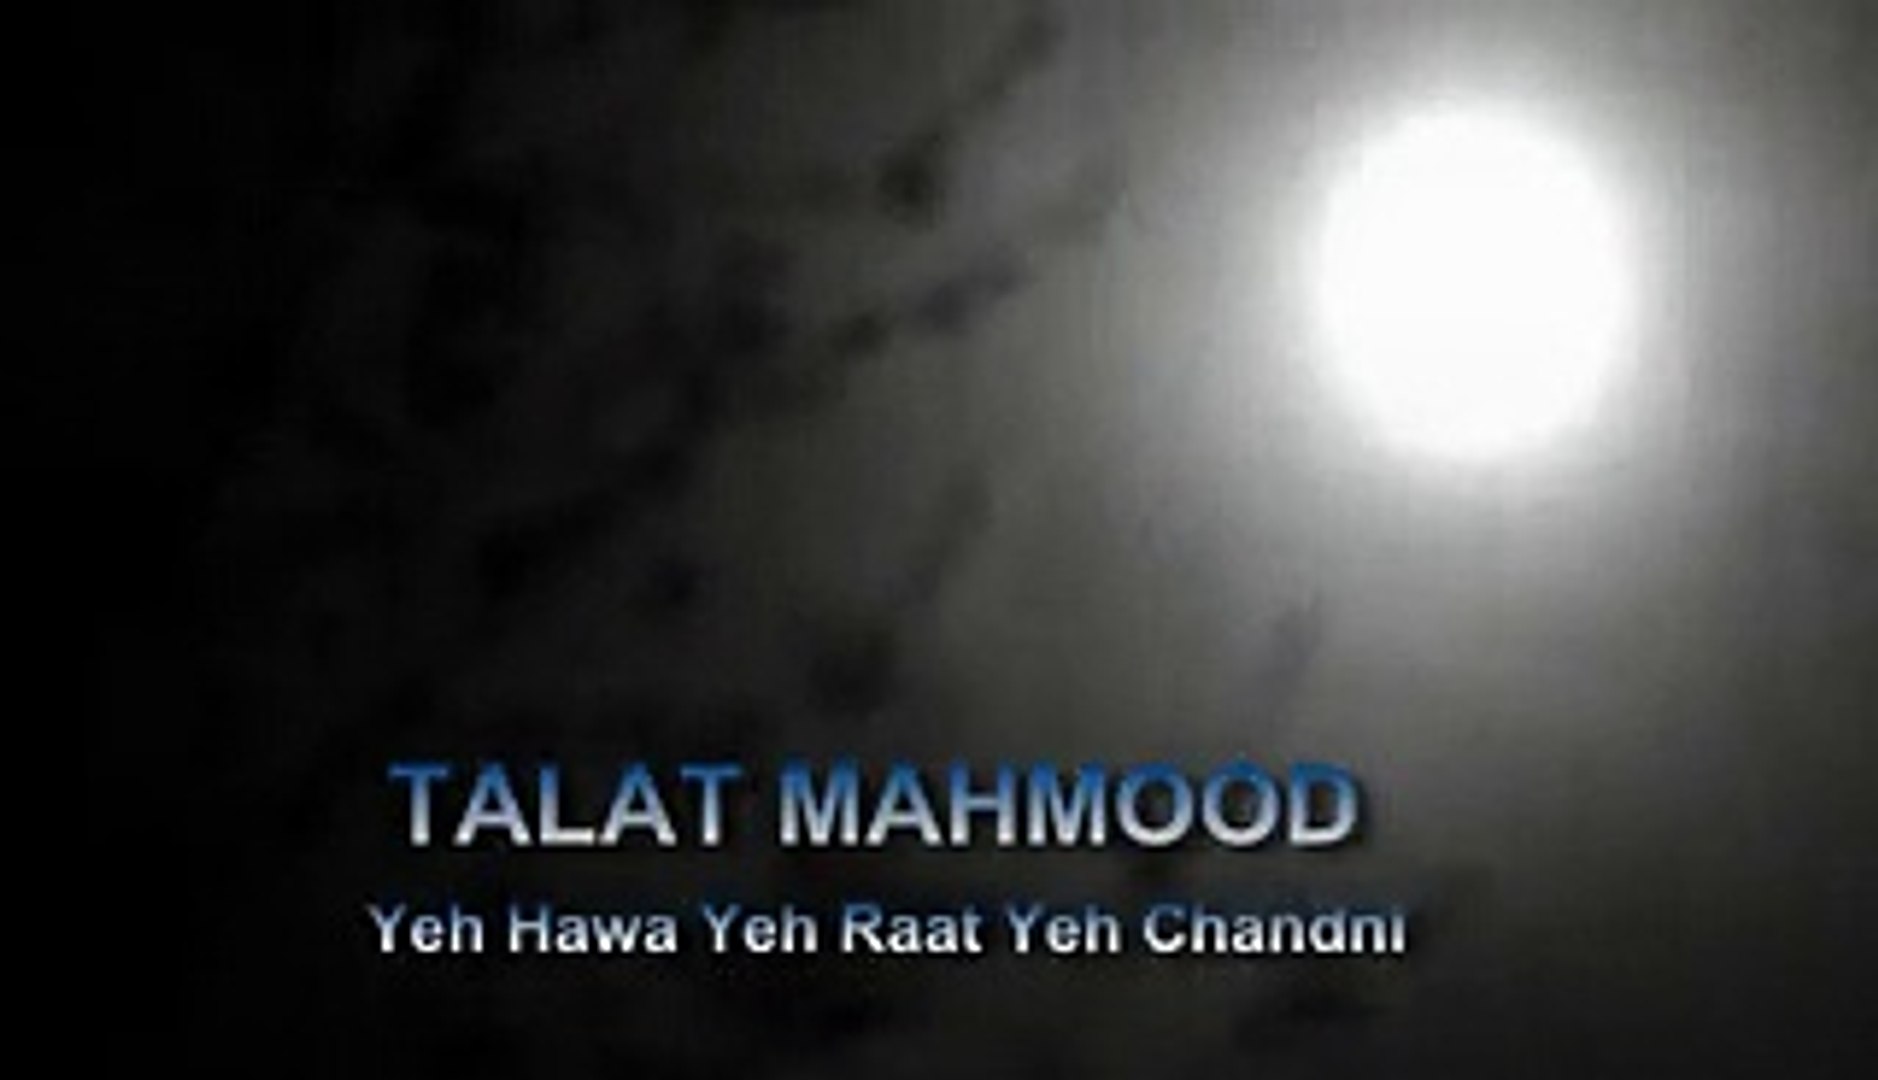 Yeh Hawa Yeh Raat Yeh Chandni Talat Mahmood Dilip Kumar Singing For Madhub Video Dailymotion » yeh hawa yeh raat yeh chandni. yeh hawa yeh raat yeh chandni talat mahmood dilip kumar singing for madhub